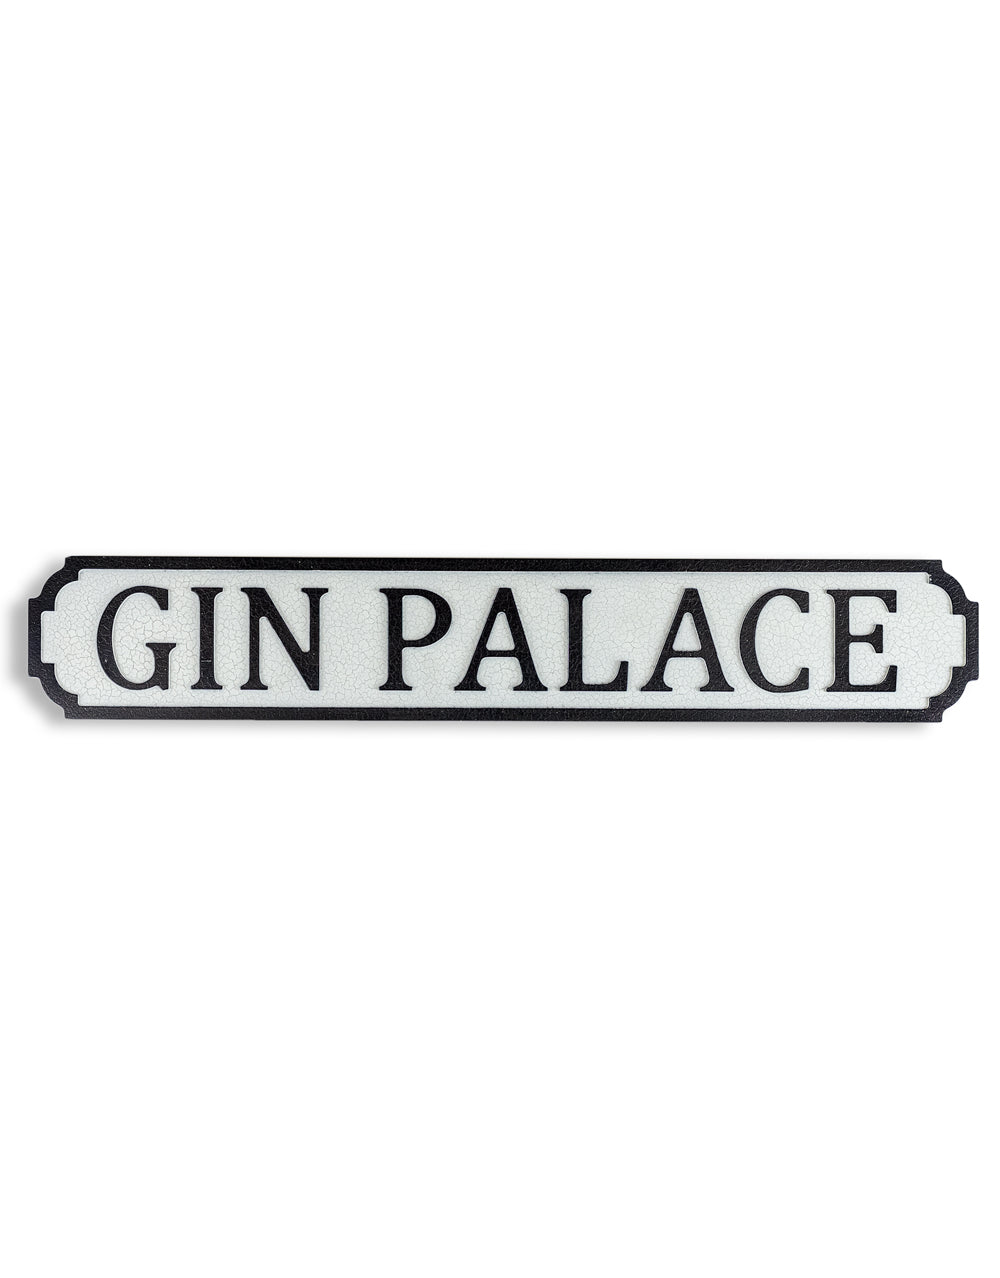 "Gin Palace" Sign